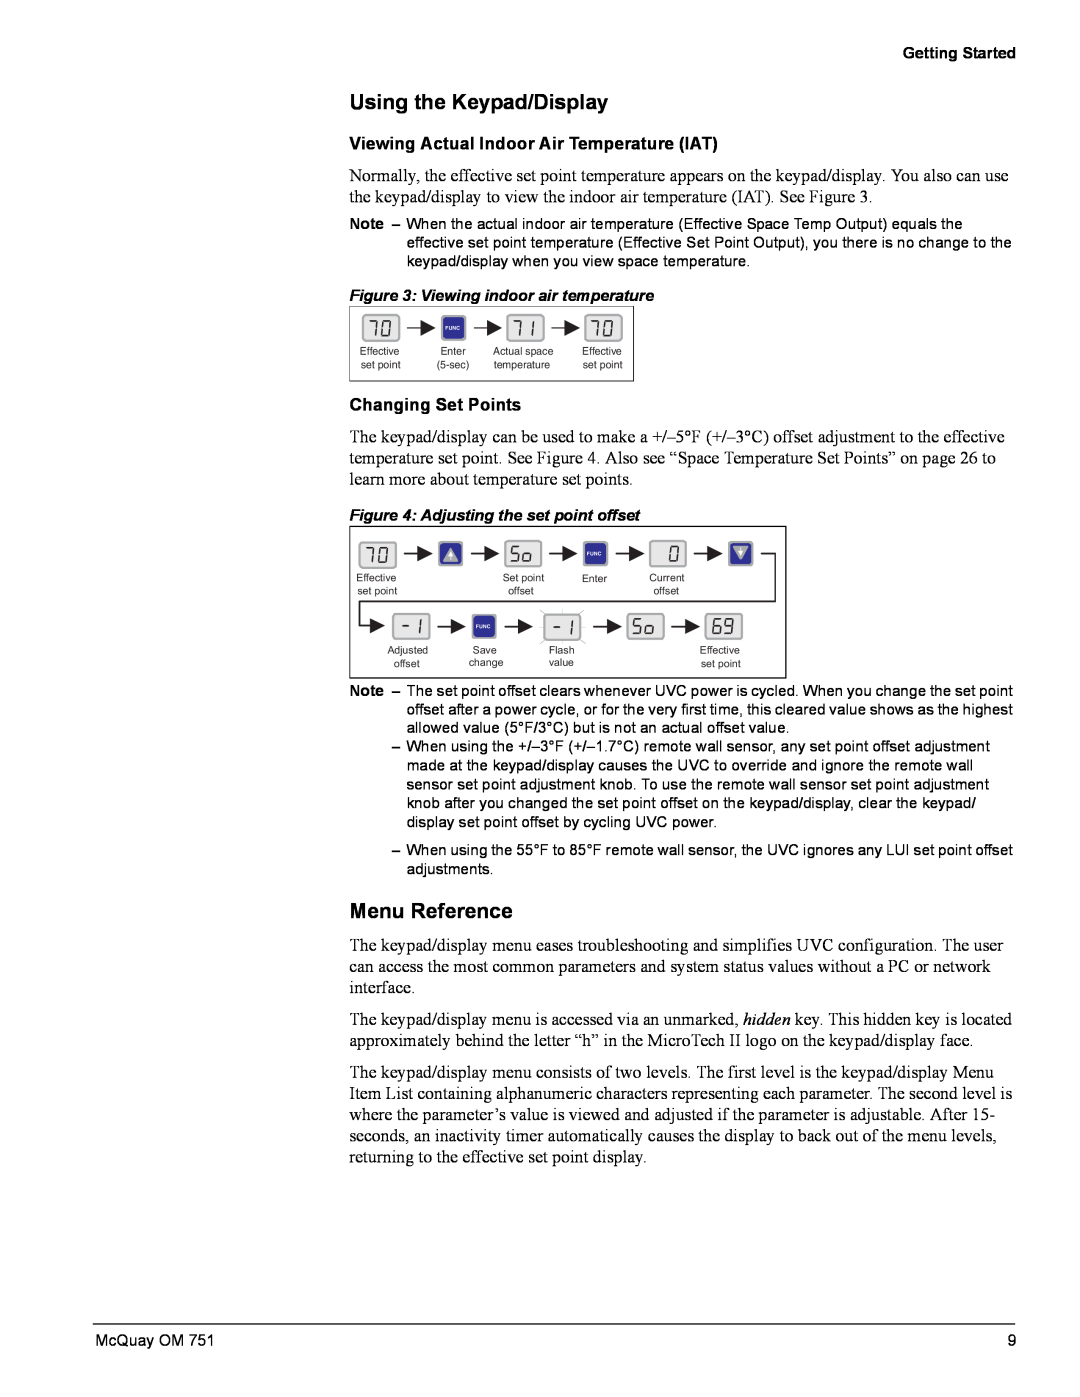 American Standard UV05 manual Using the Keypad/Display, Menu Reference, Func 